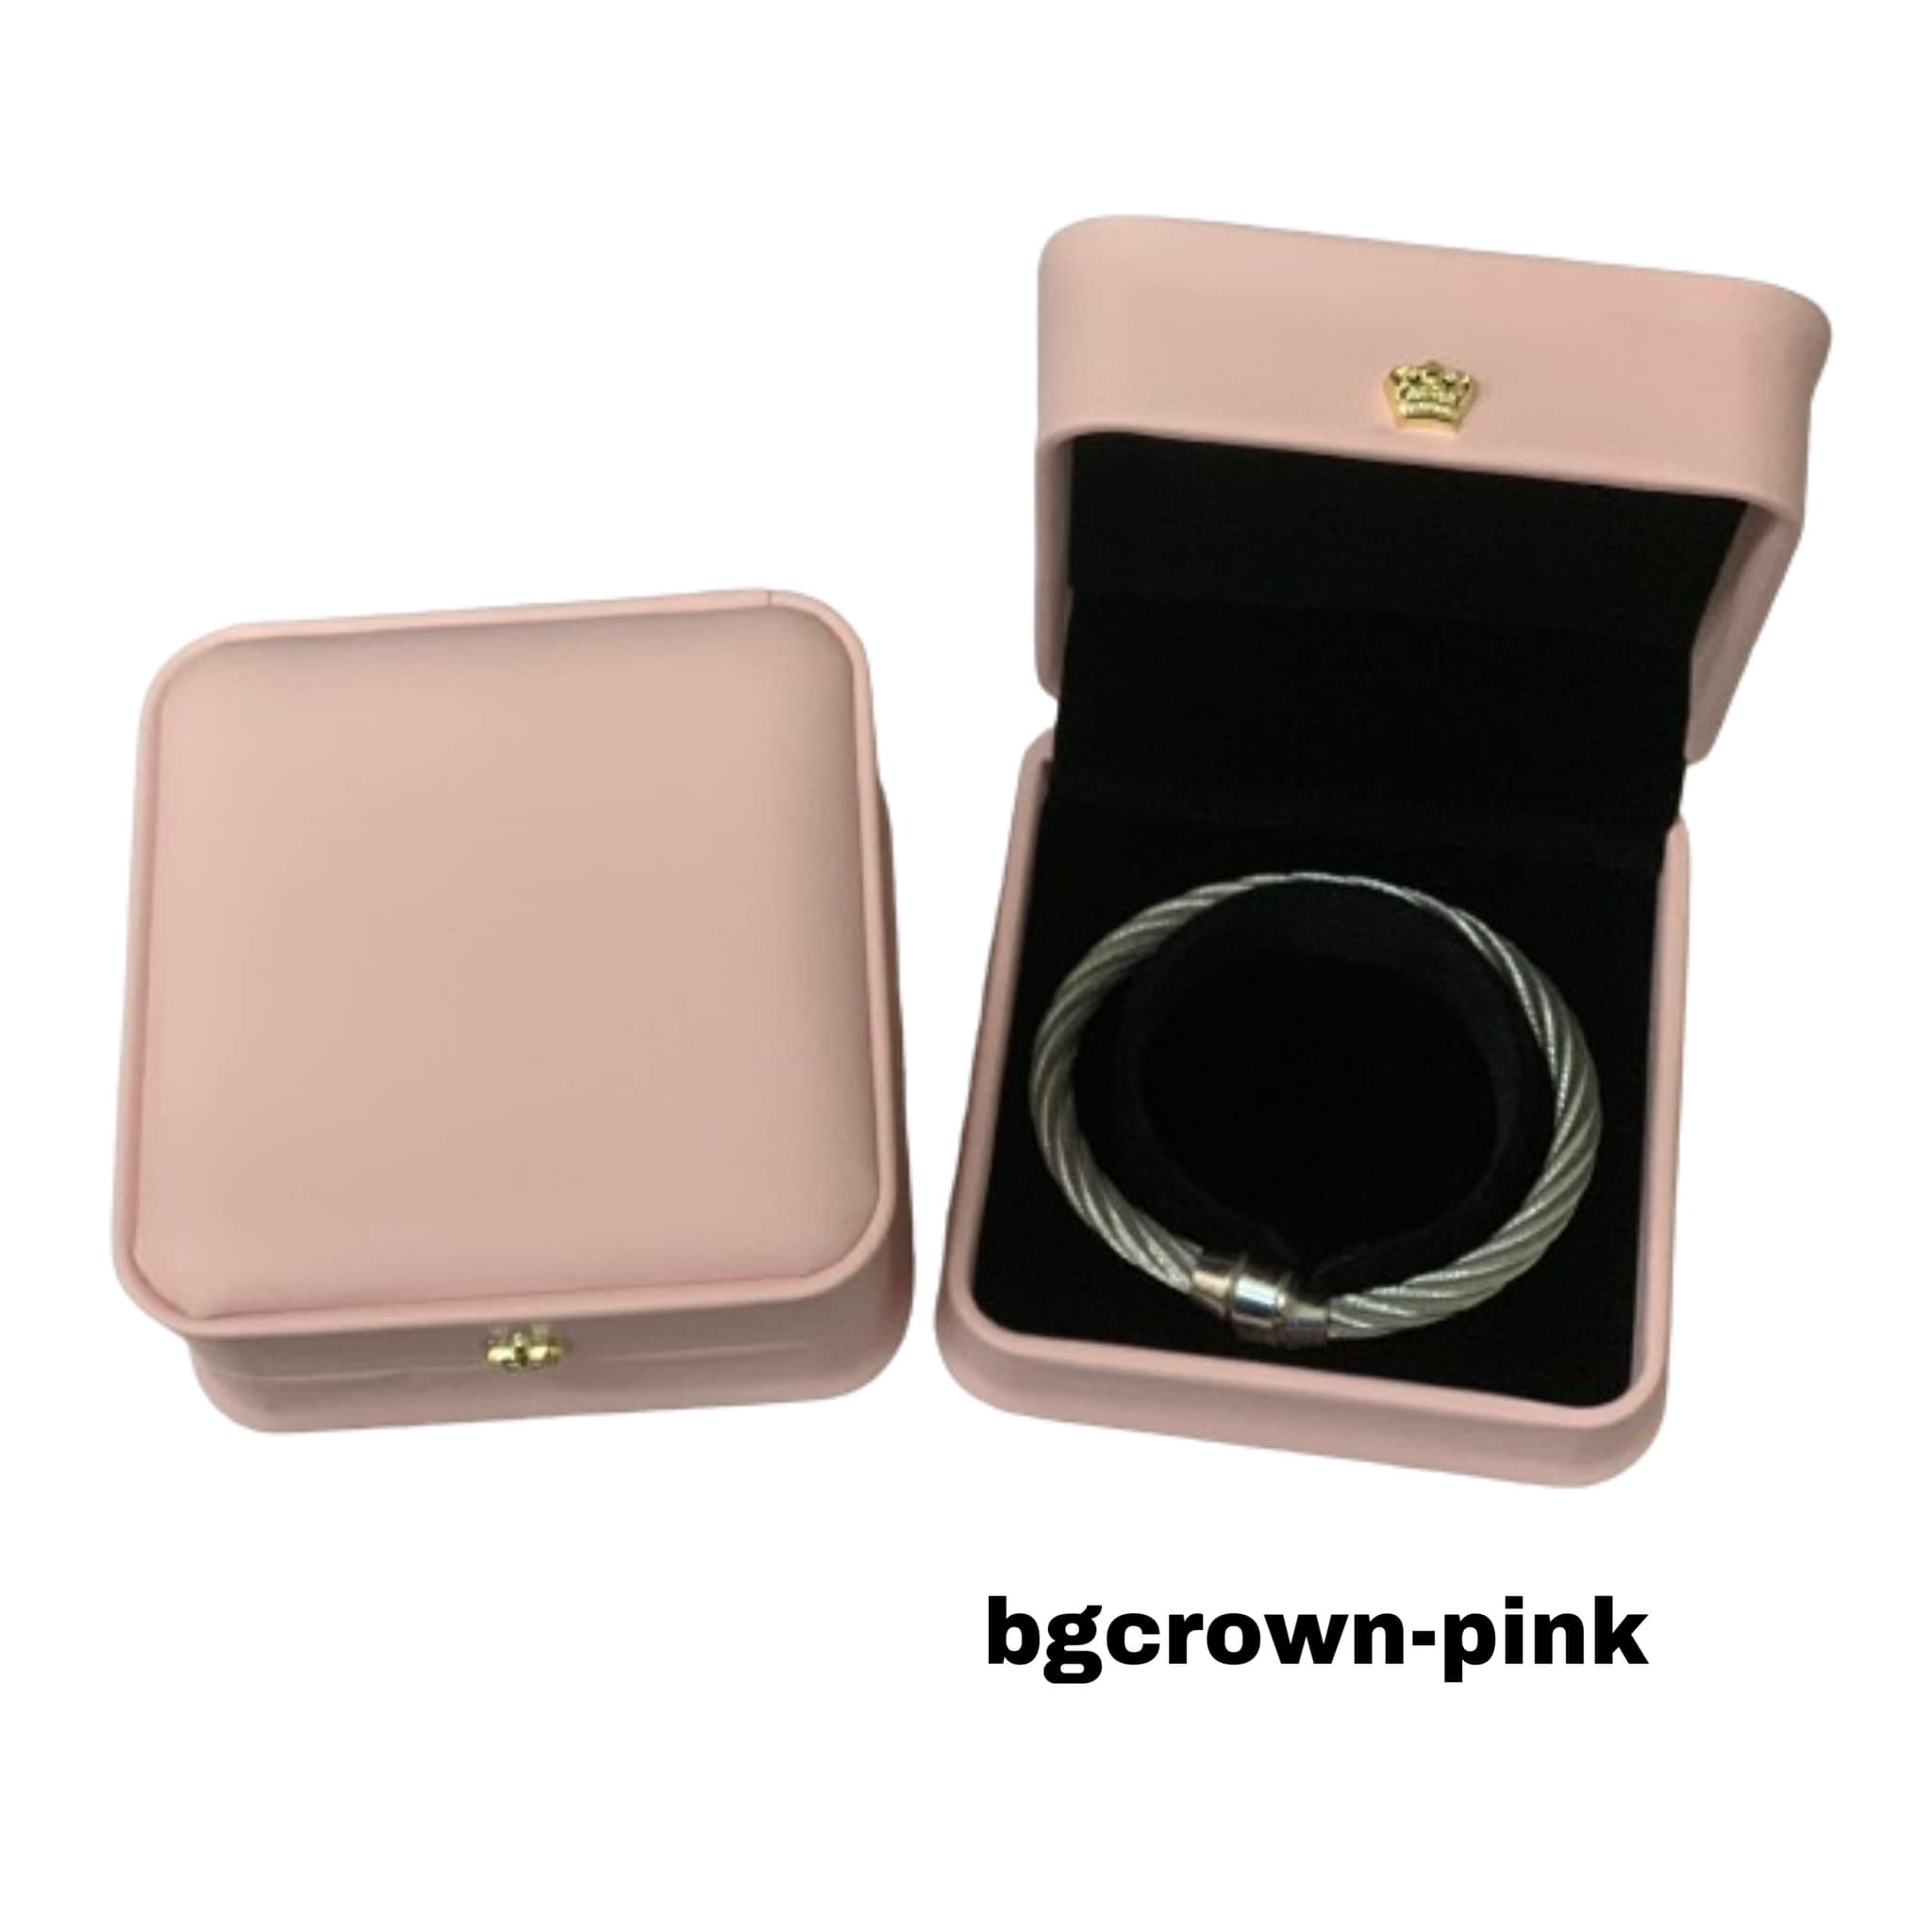 bgcrown-pink